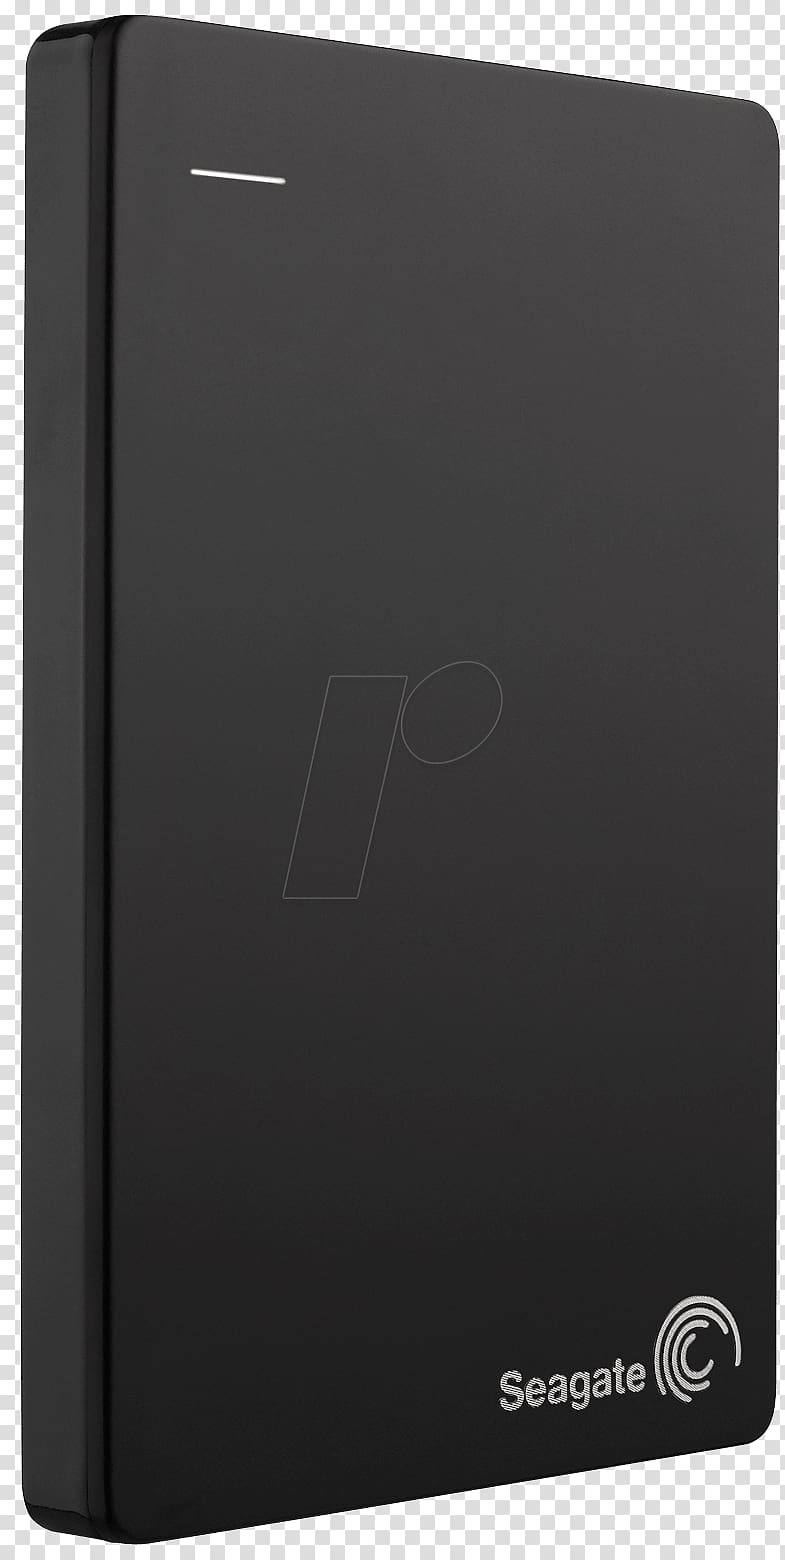 Hewlett-Packard Laptop HP EliteBook Hard Drives HP ProBook, seagate backup plus hub transparent background PNG clipart